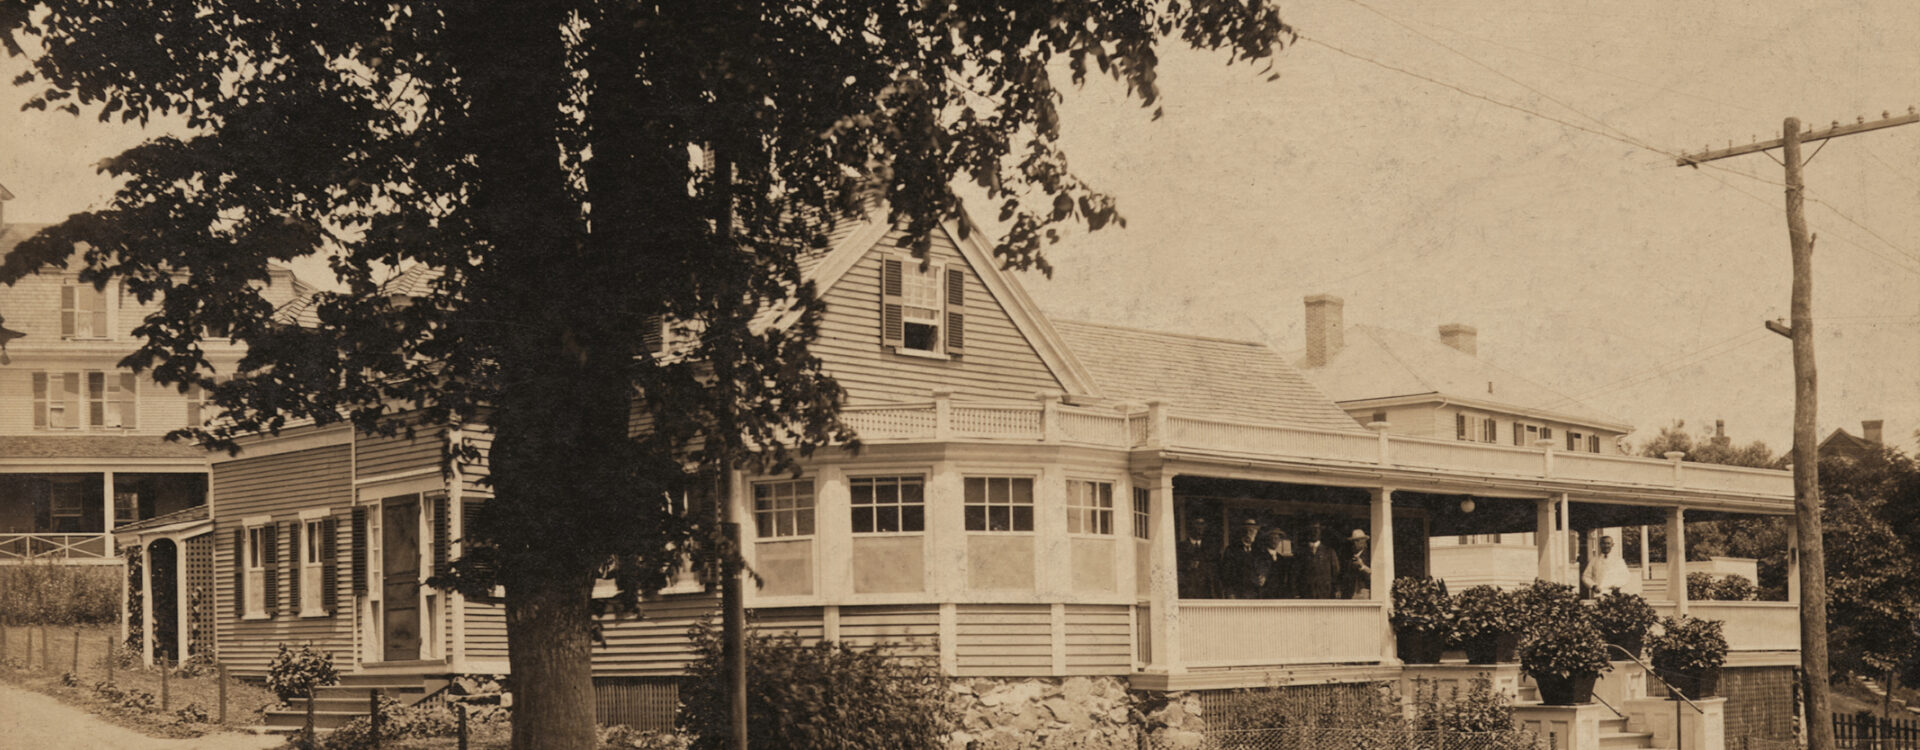 York Harbor Inn Historic Porch